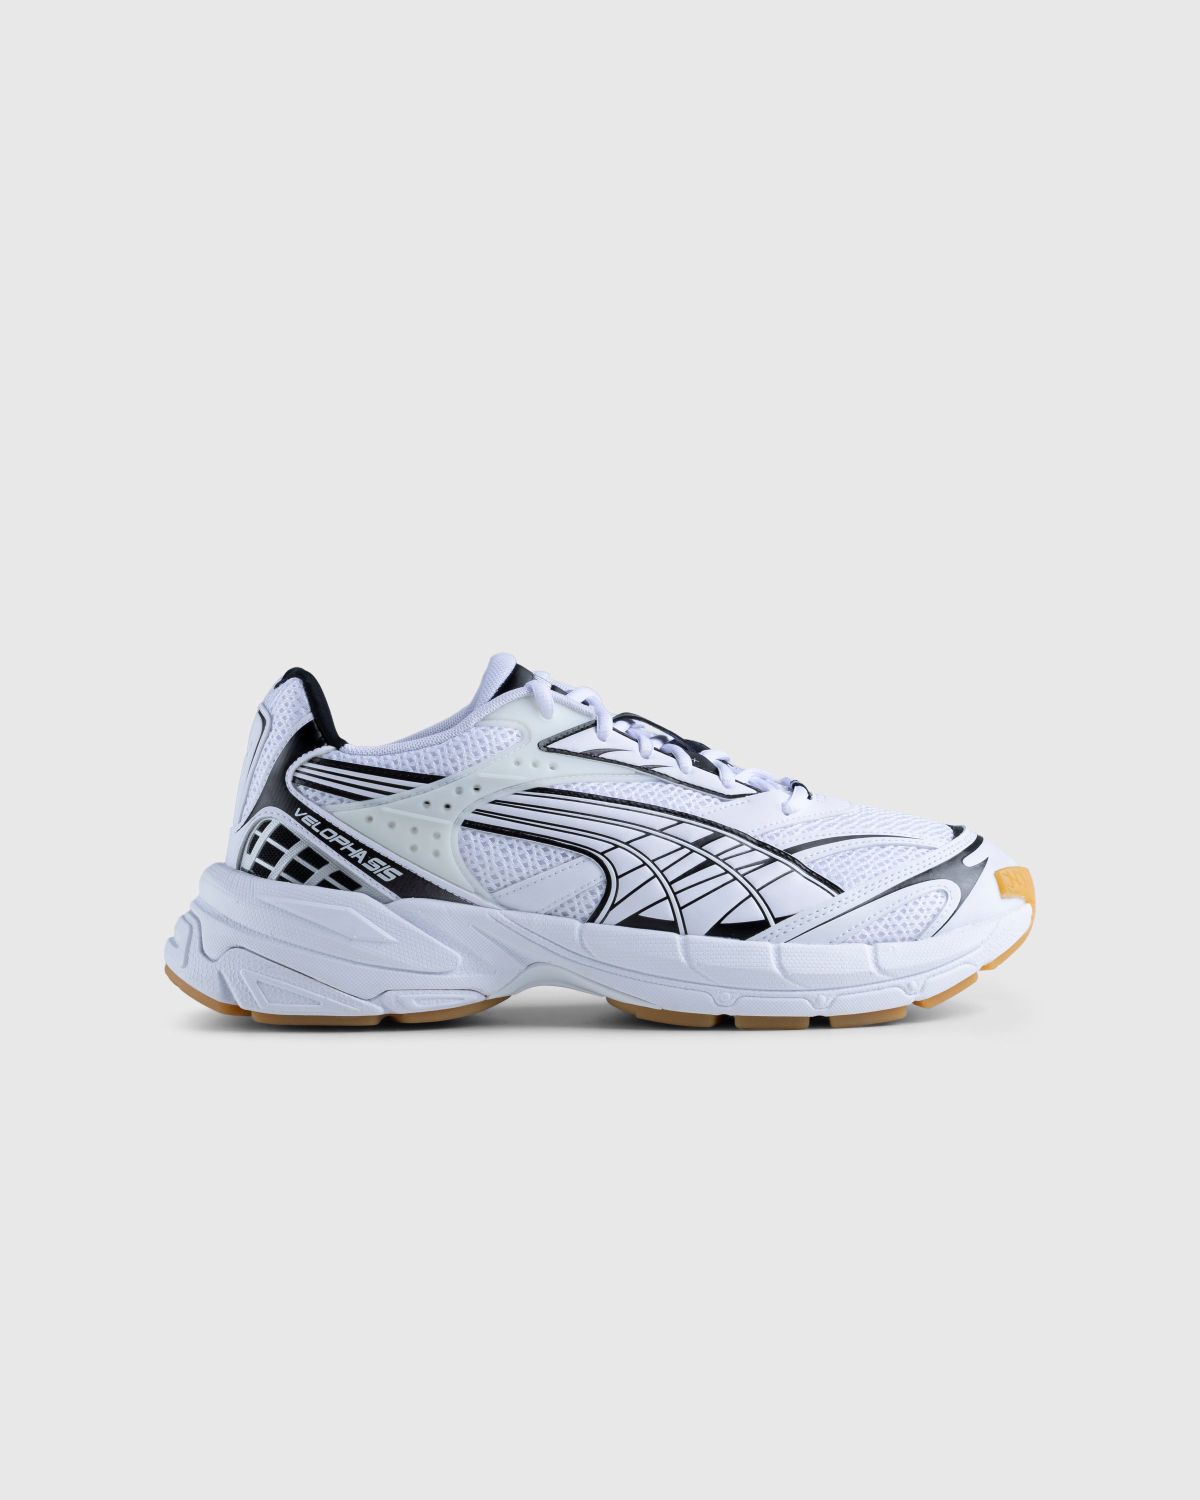 Puma – Velophasis Technisch White - Sneakers - White - Image 1